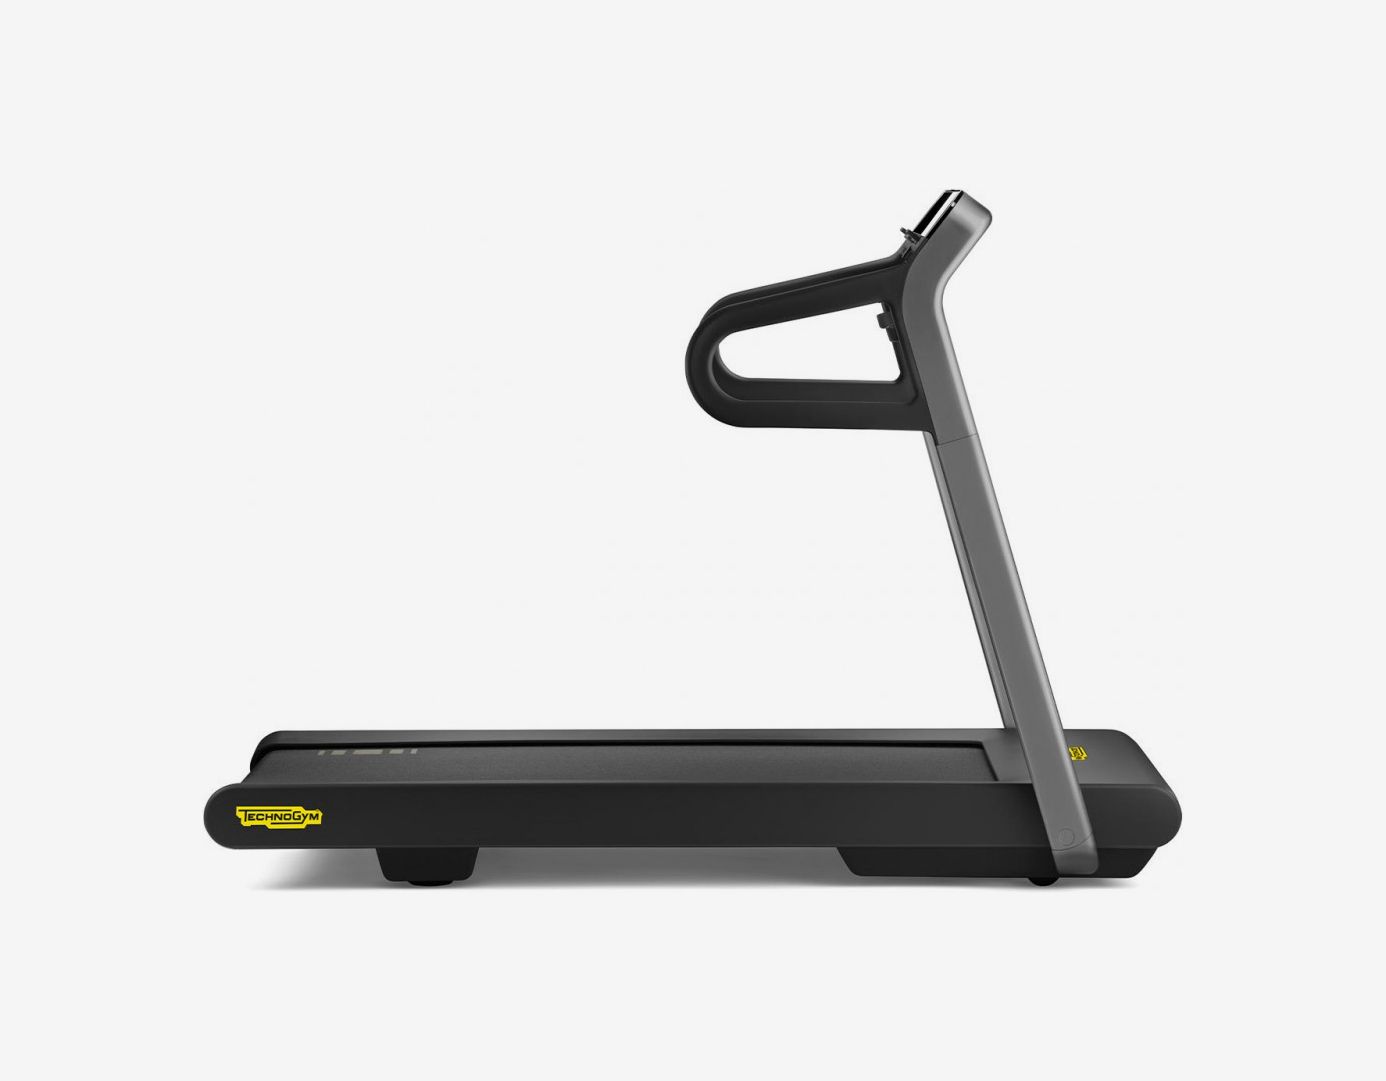 Smart Home Gym Basics - Best Buy